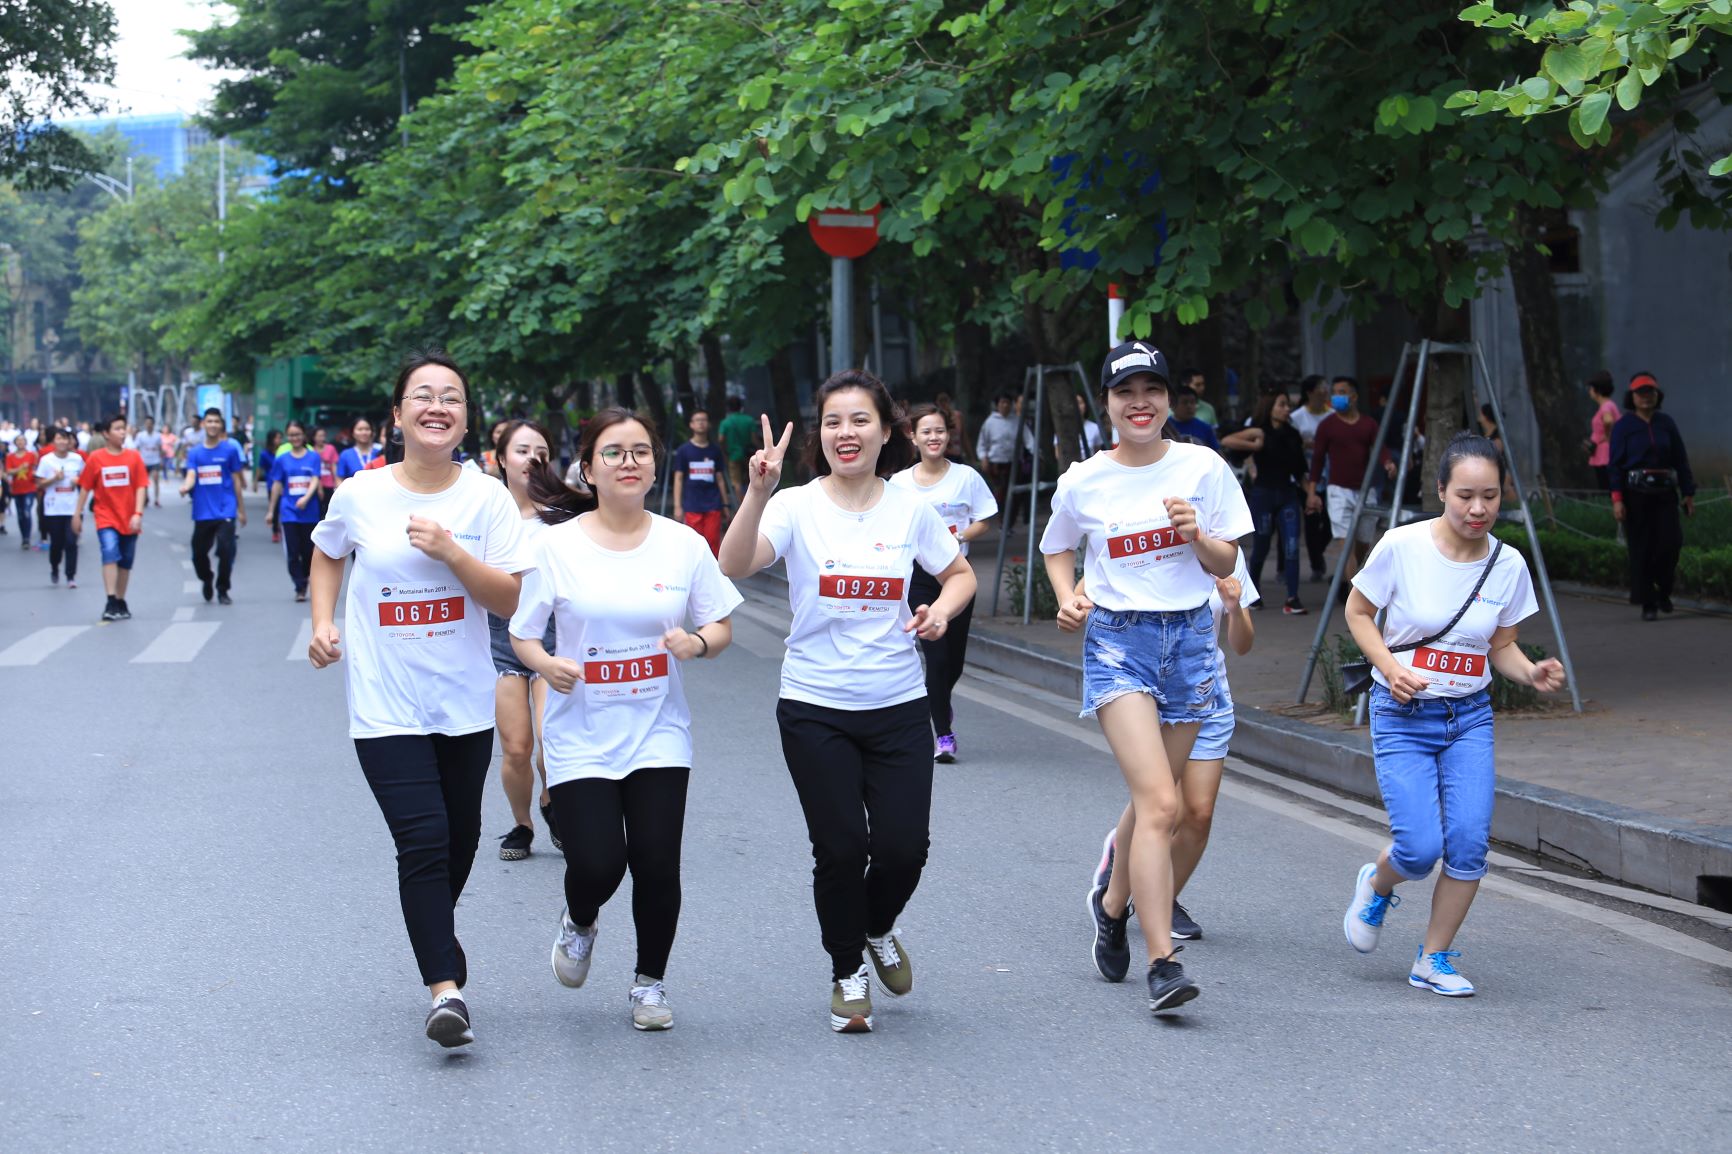 Mottainai Run 2018 thu hút được rất nhiều nữ giới tham gia.